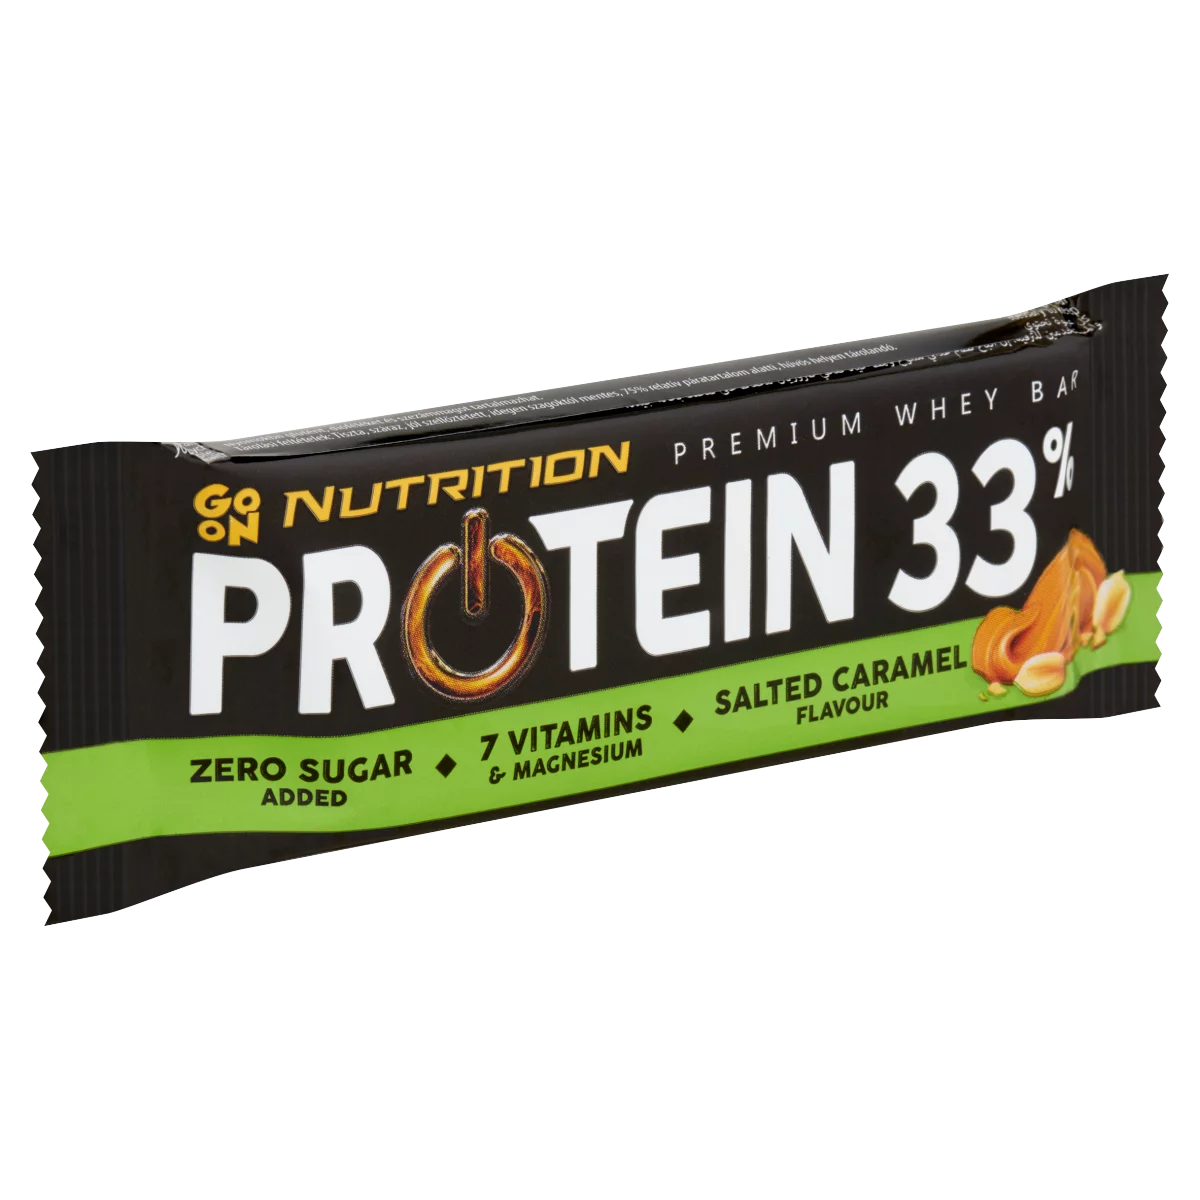 Go On Nutrition Protein Bar 33% Salt Caramel-Peanut Butter 50 g